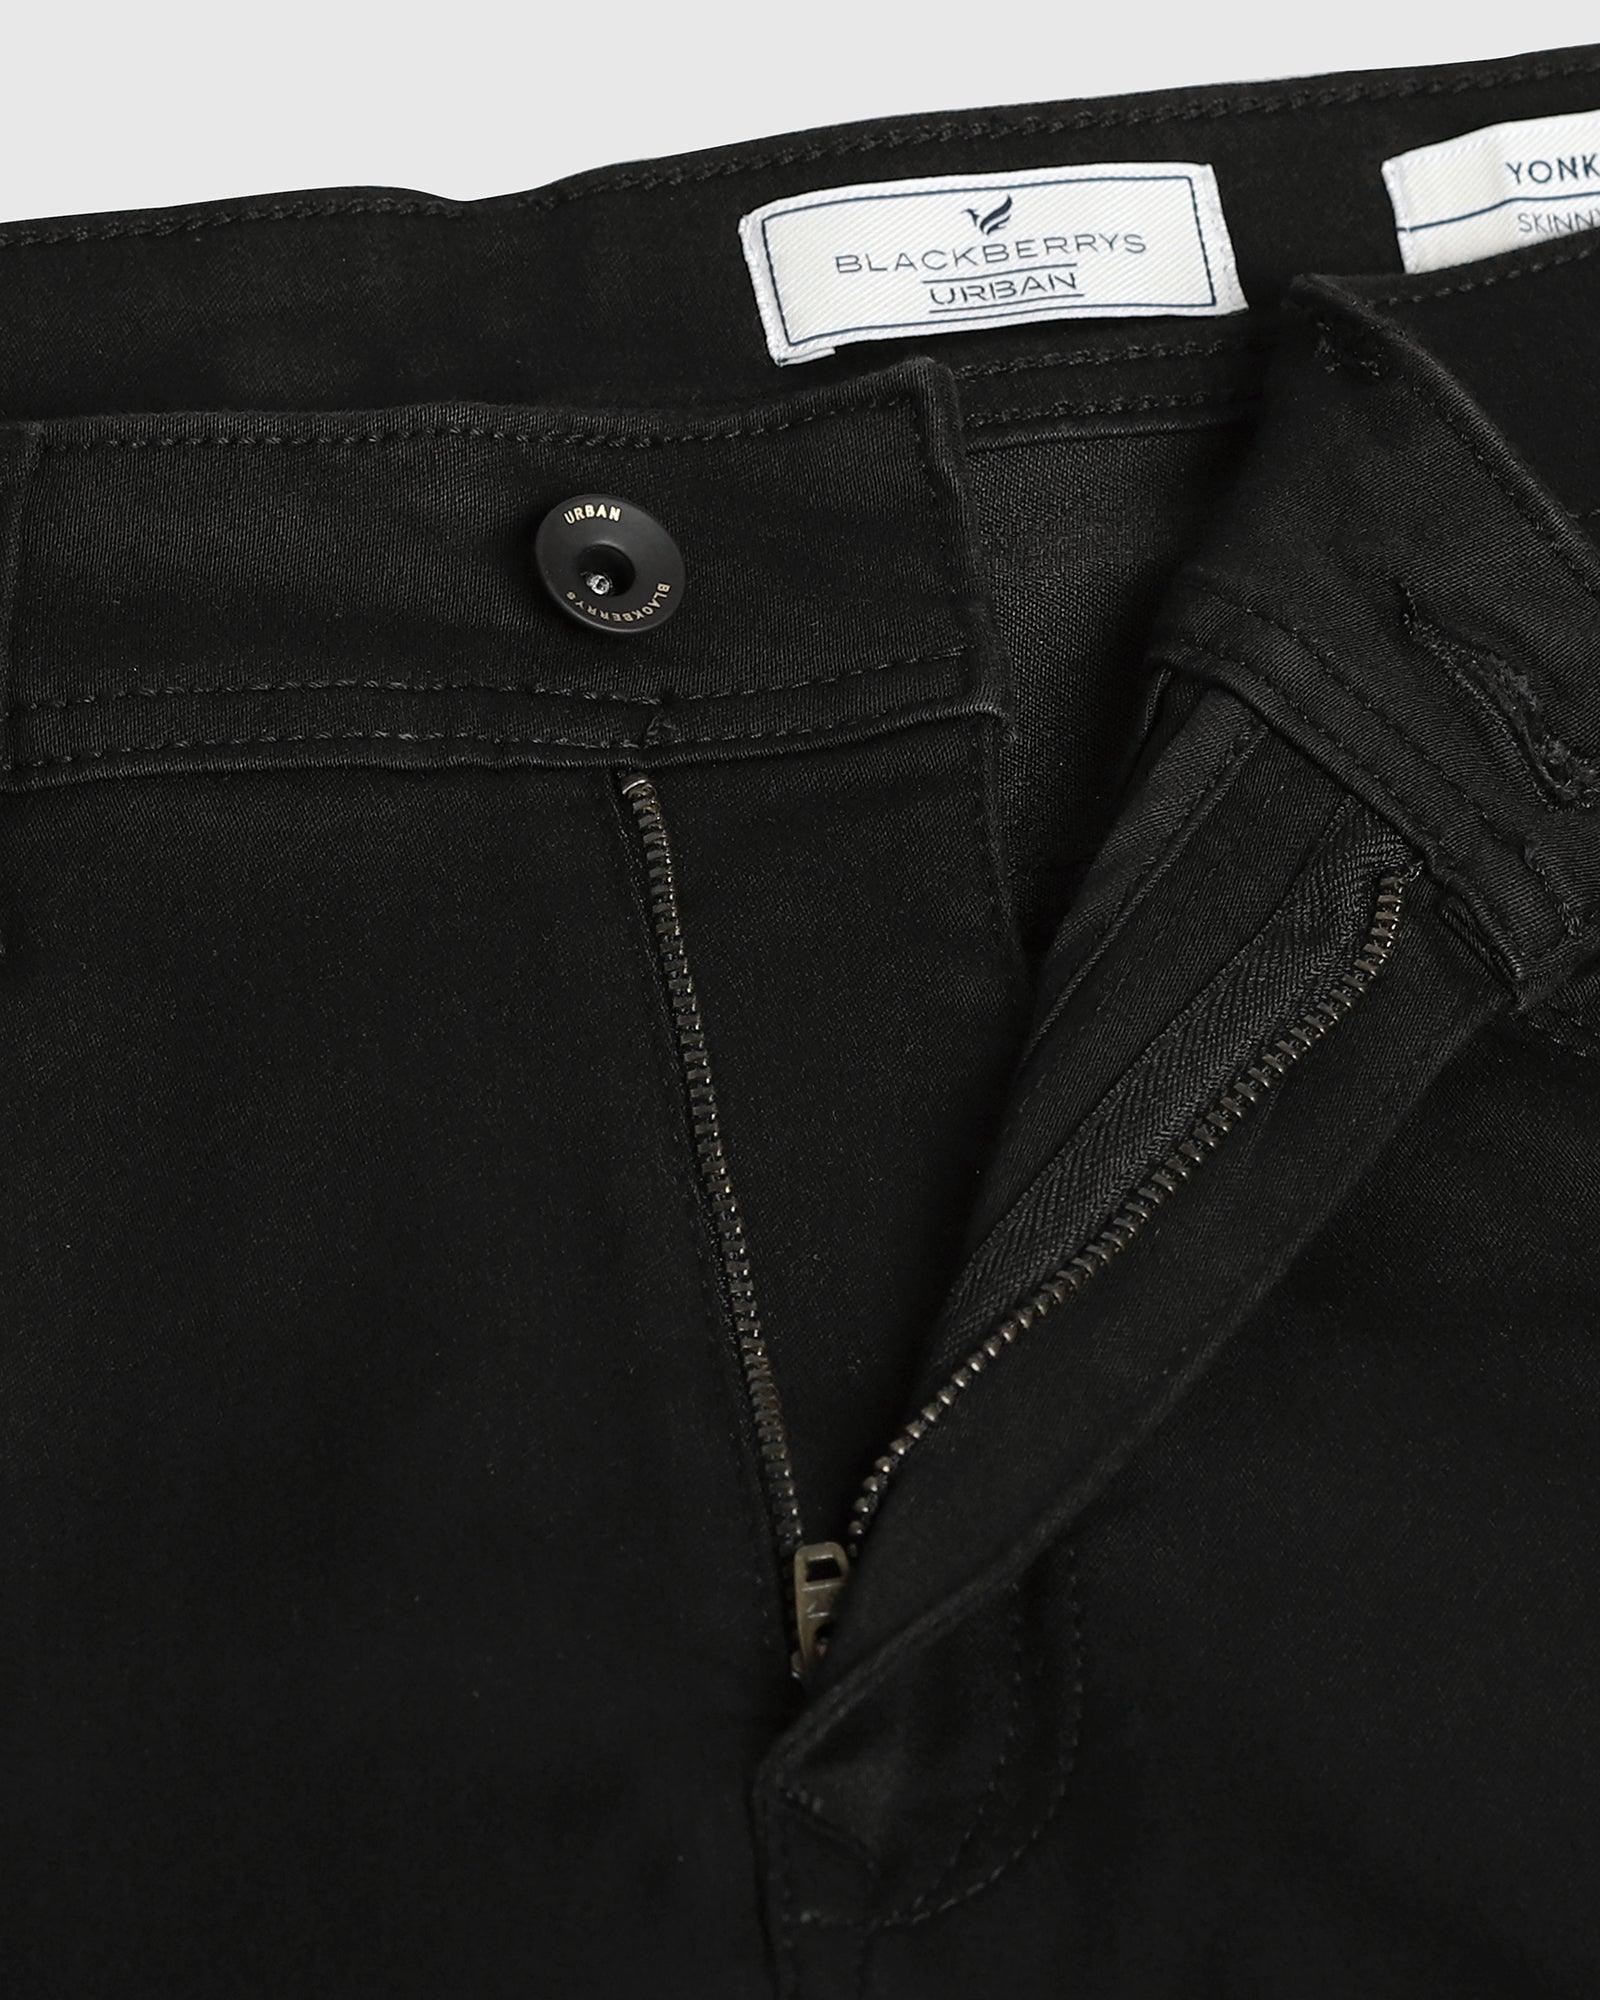 Super Clean Slim Yonk Fit Black Jeans - Gray